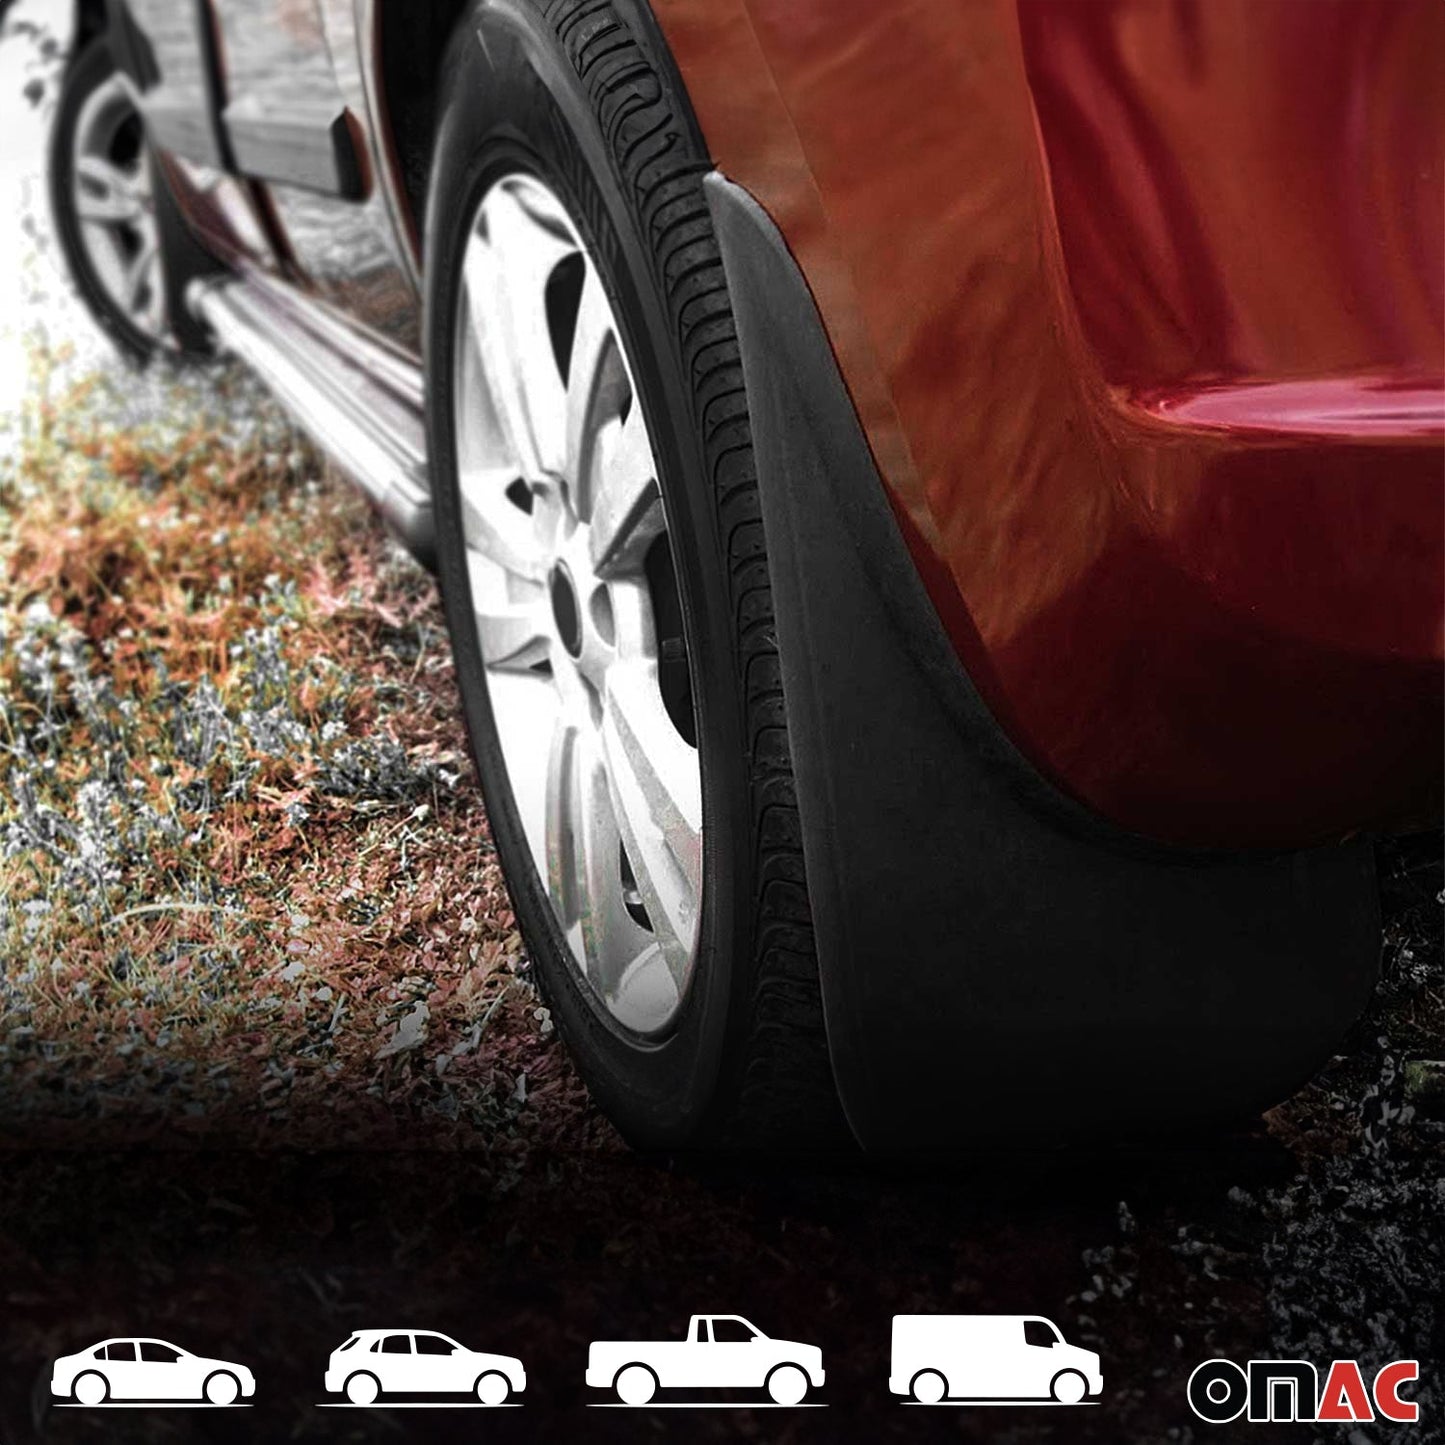 OMAC Mud Guards Splash Mud Flaps for Mazda CX-7 2010-2012 Black 2Pcs 4621MF141